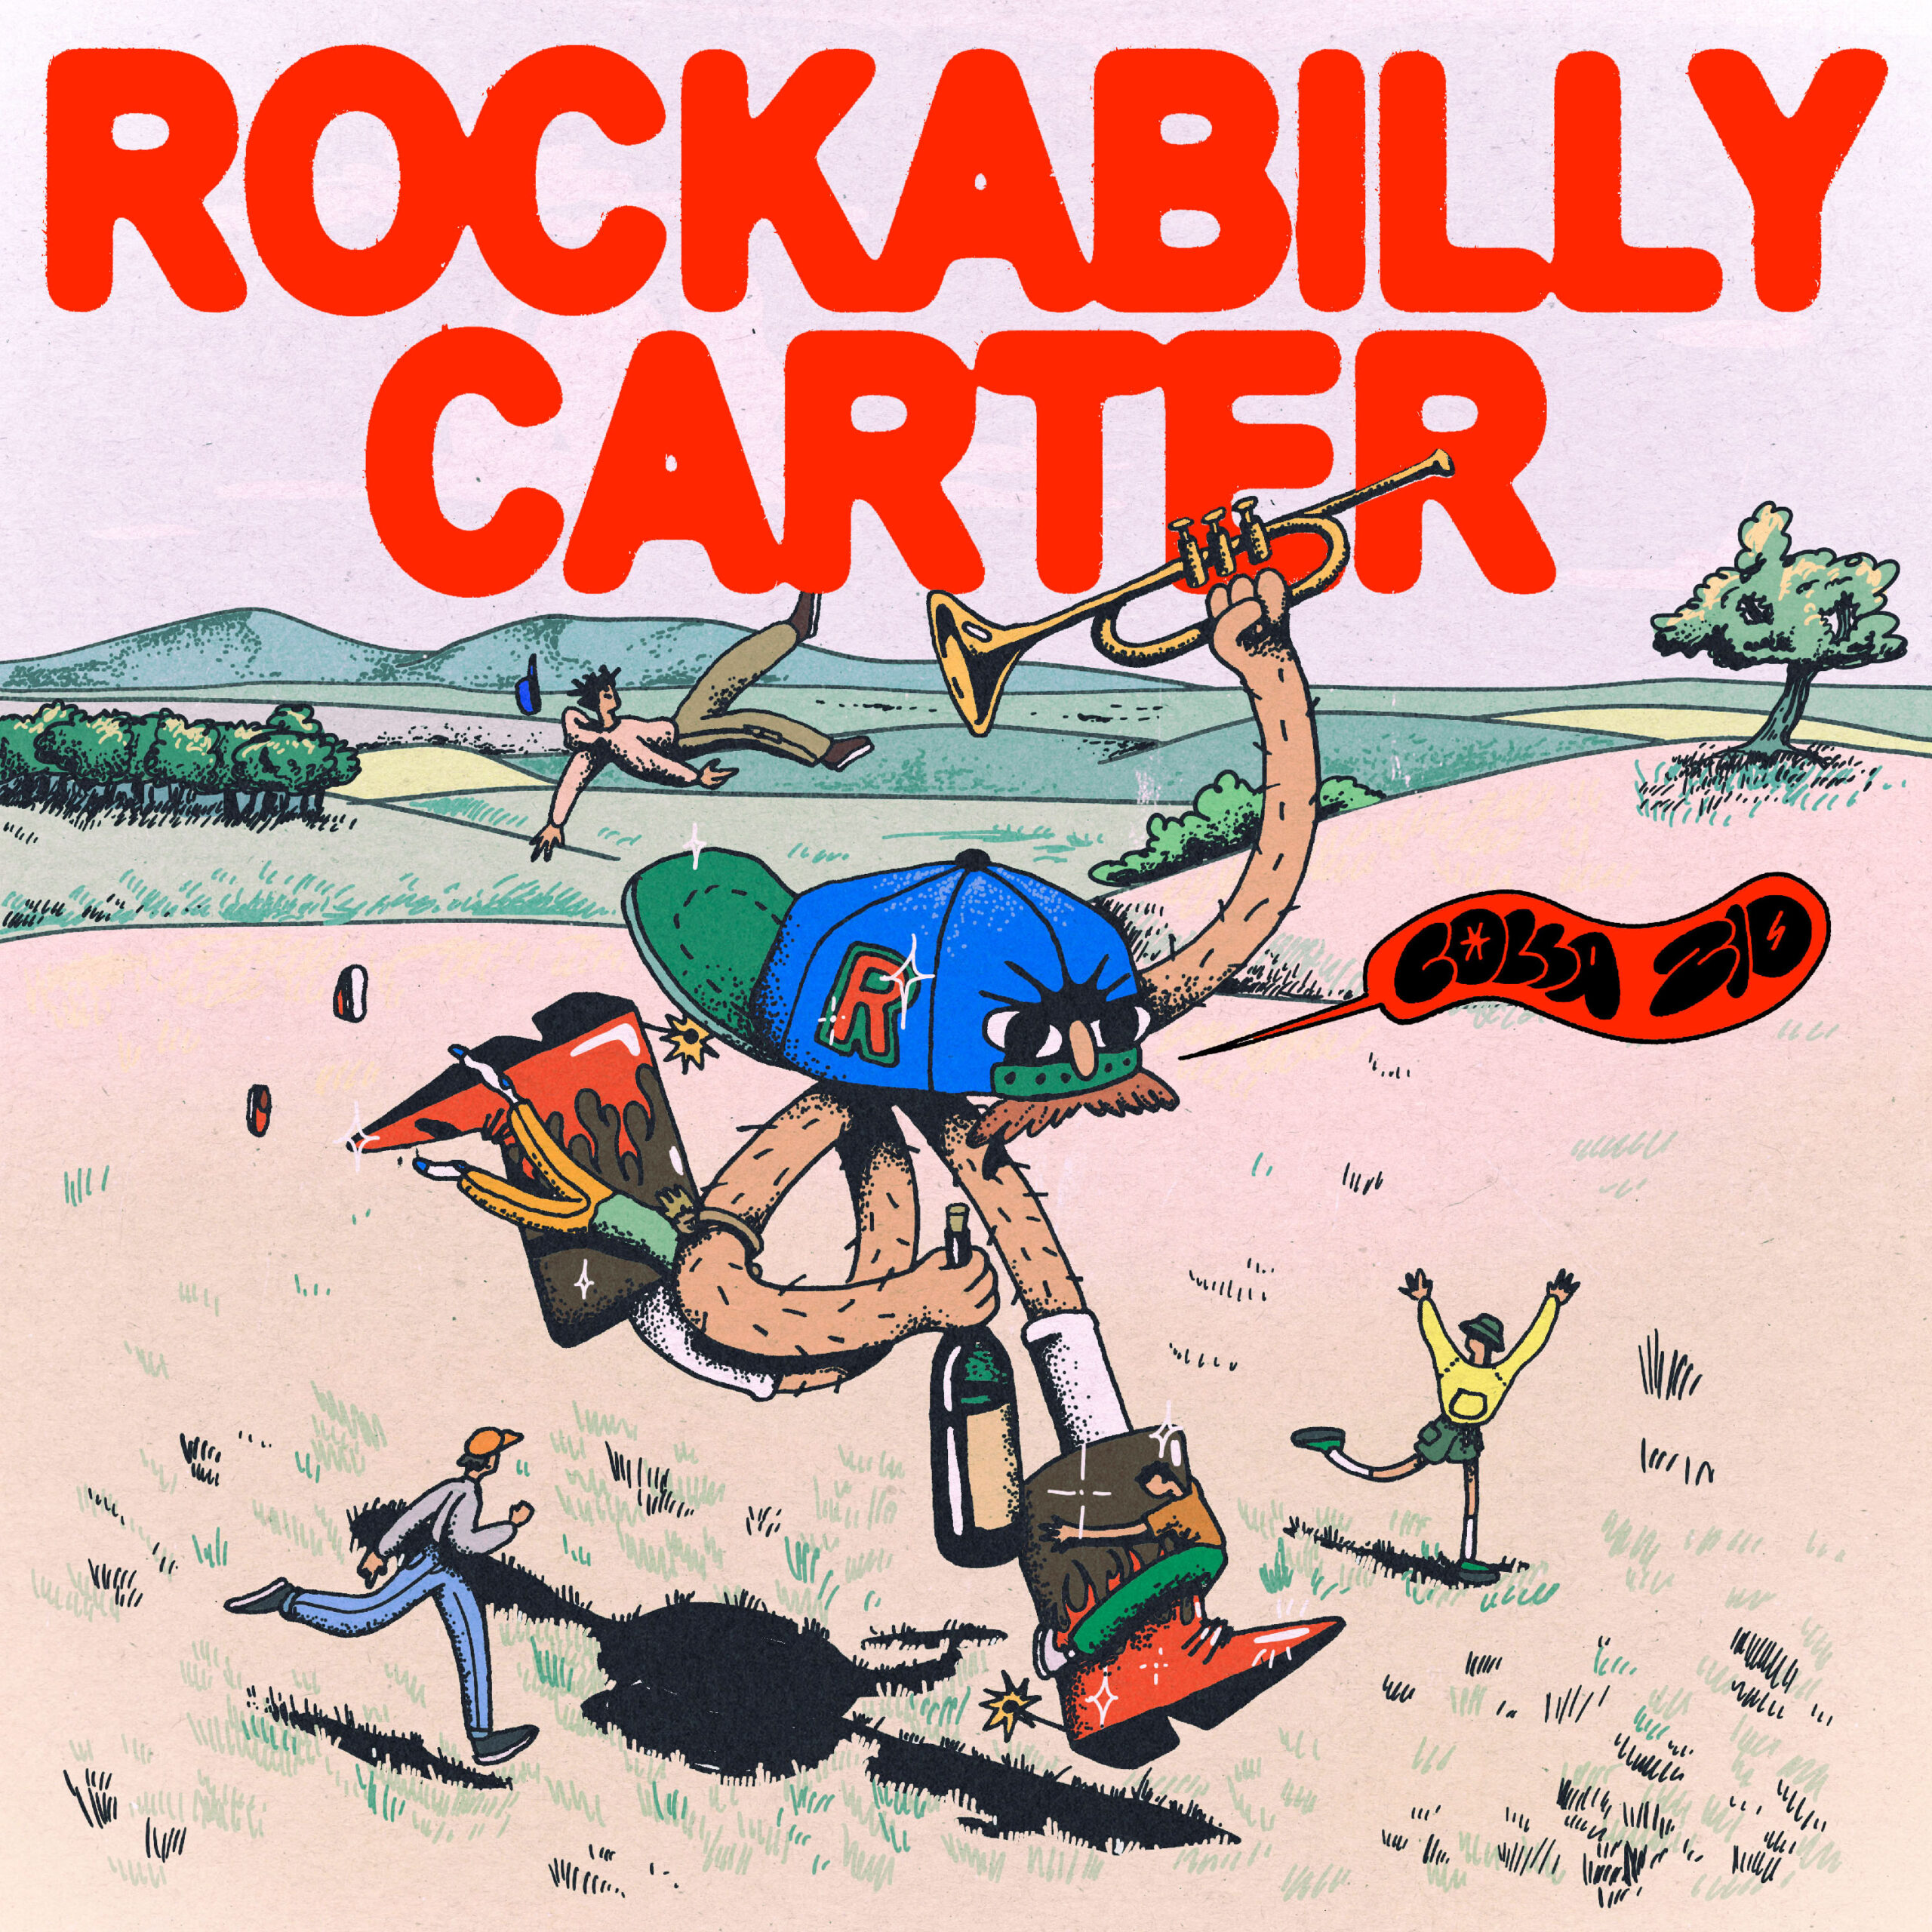 Colla Zio: dopo Sanremo esce oggi l’album “Rockabilly Carter”